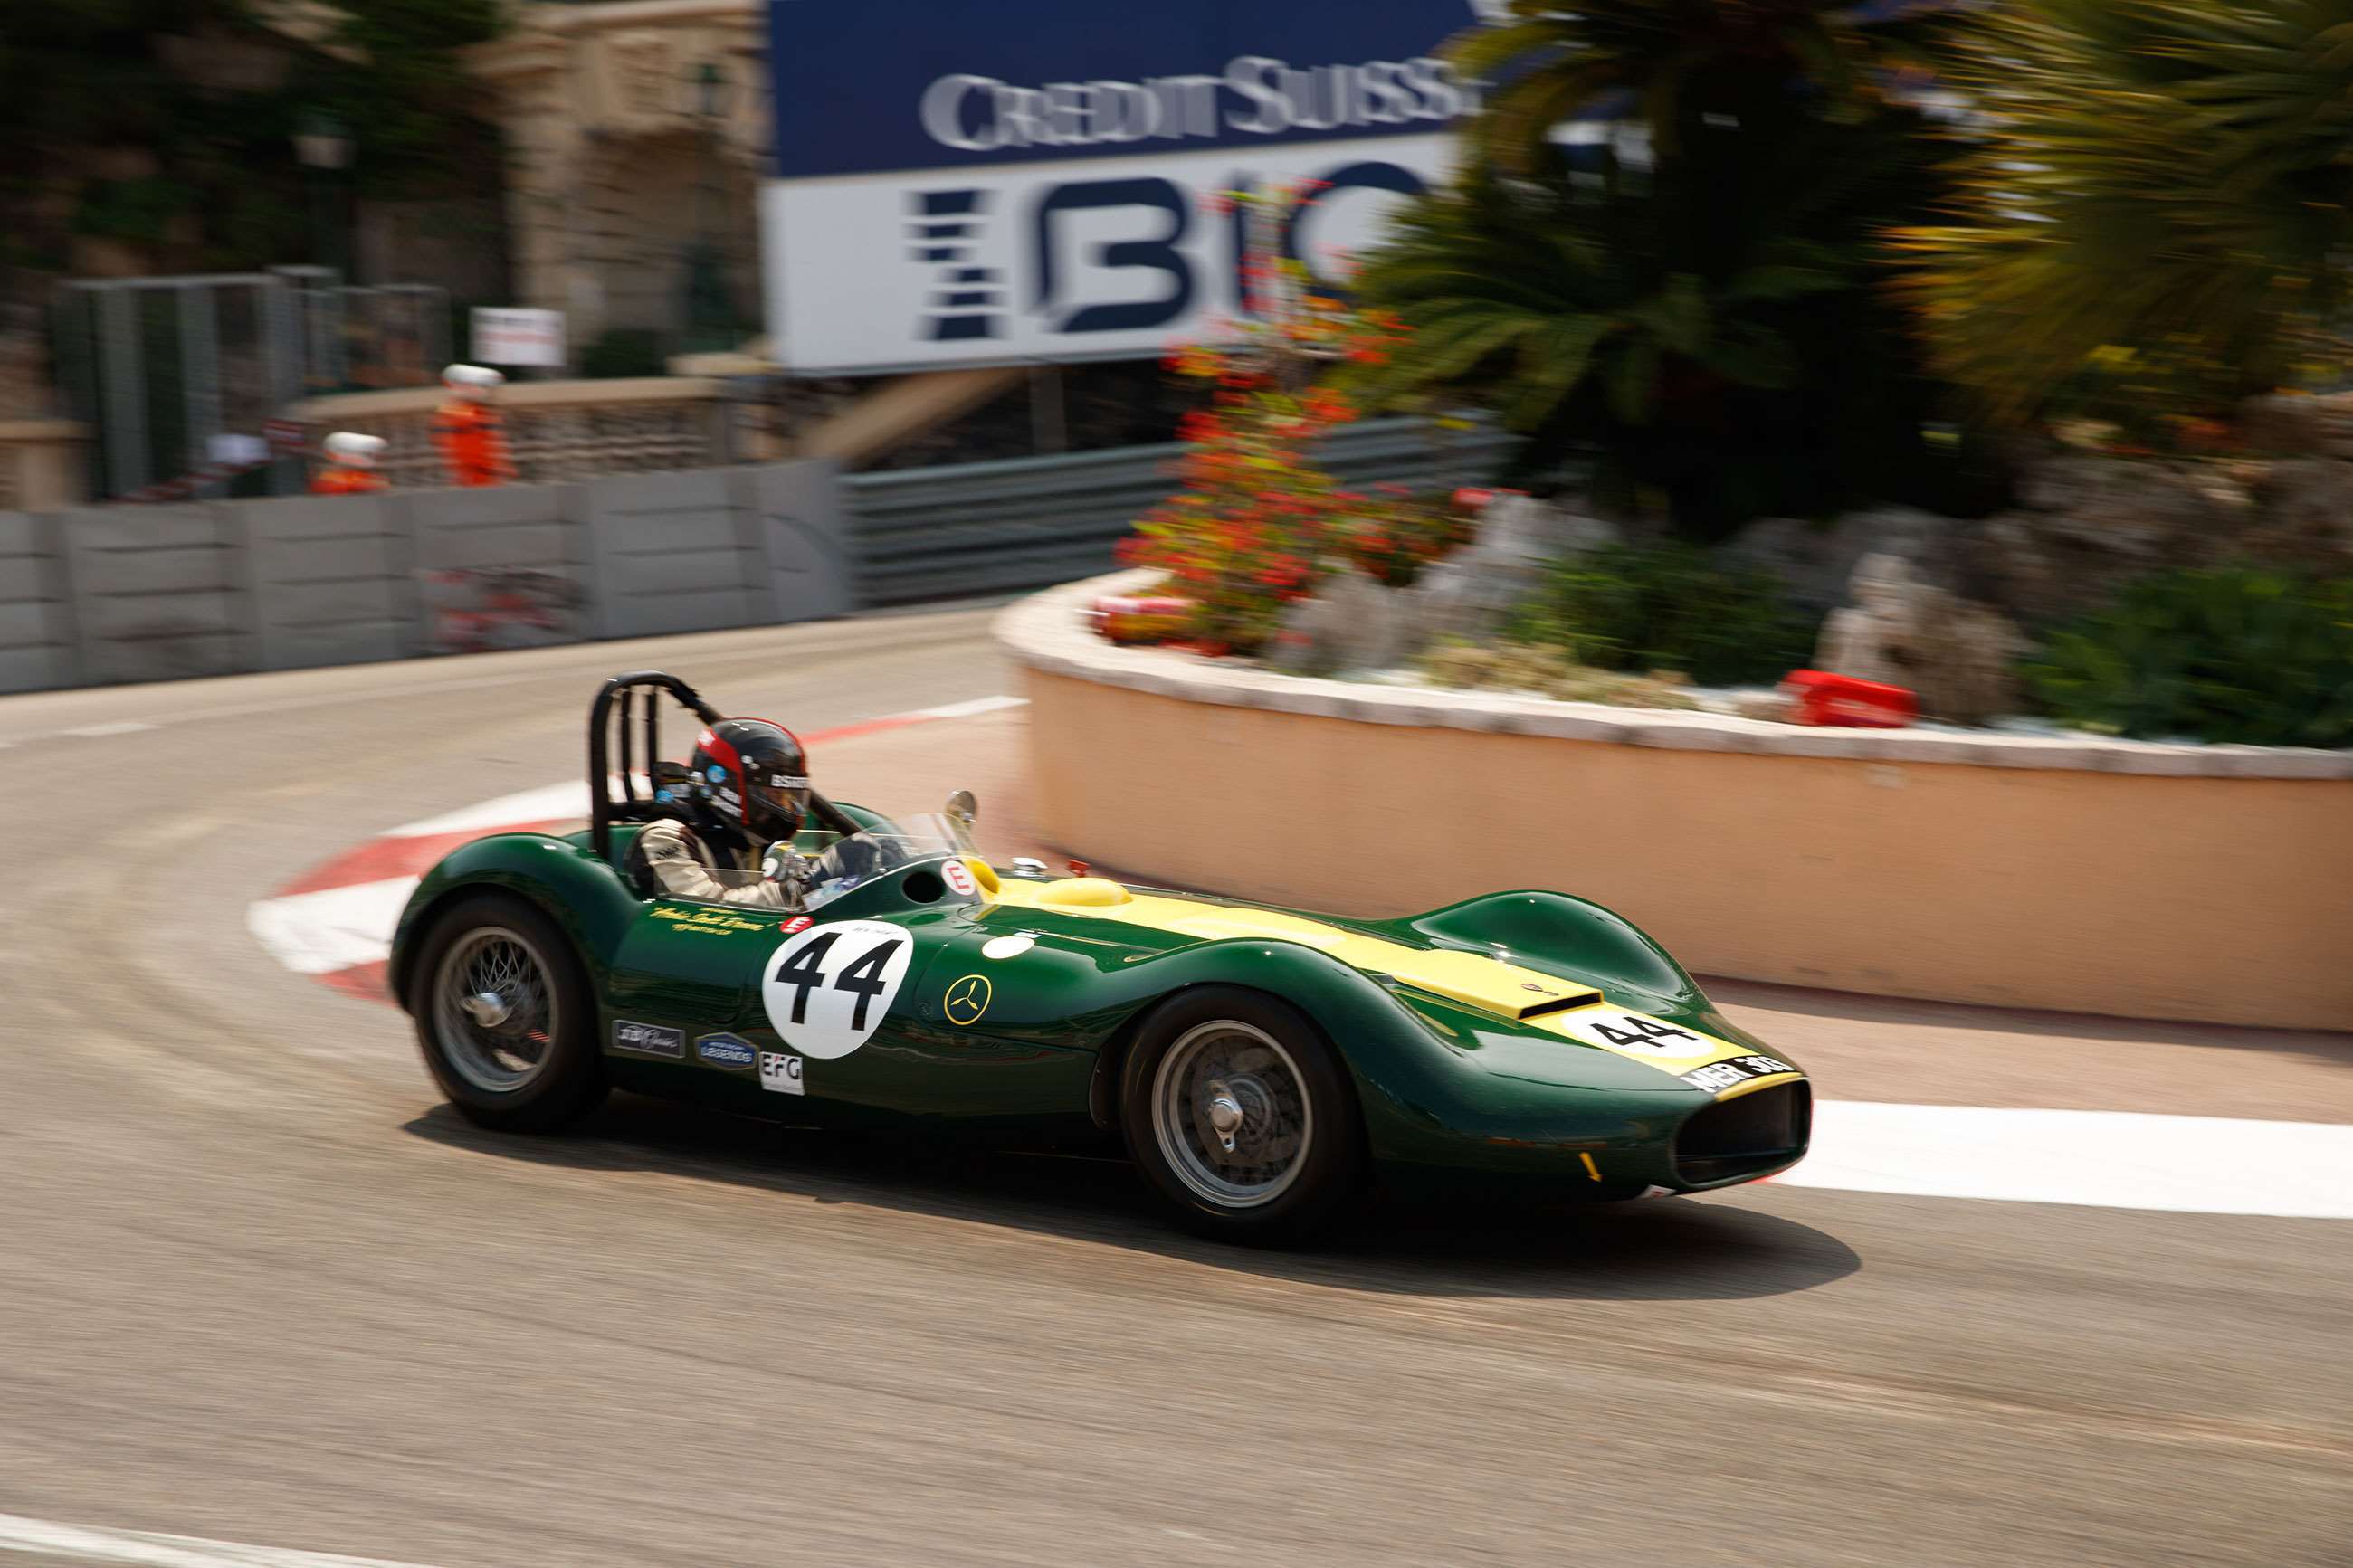 1956-lister-maserati-2.0-litre-sports-racing-two-seater-archie-brown-scott-bonhams-goodwood-20032020.jpg